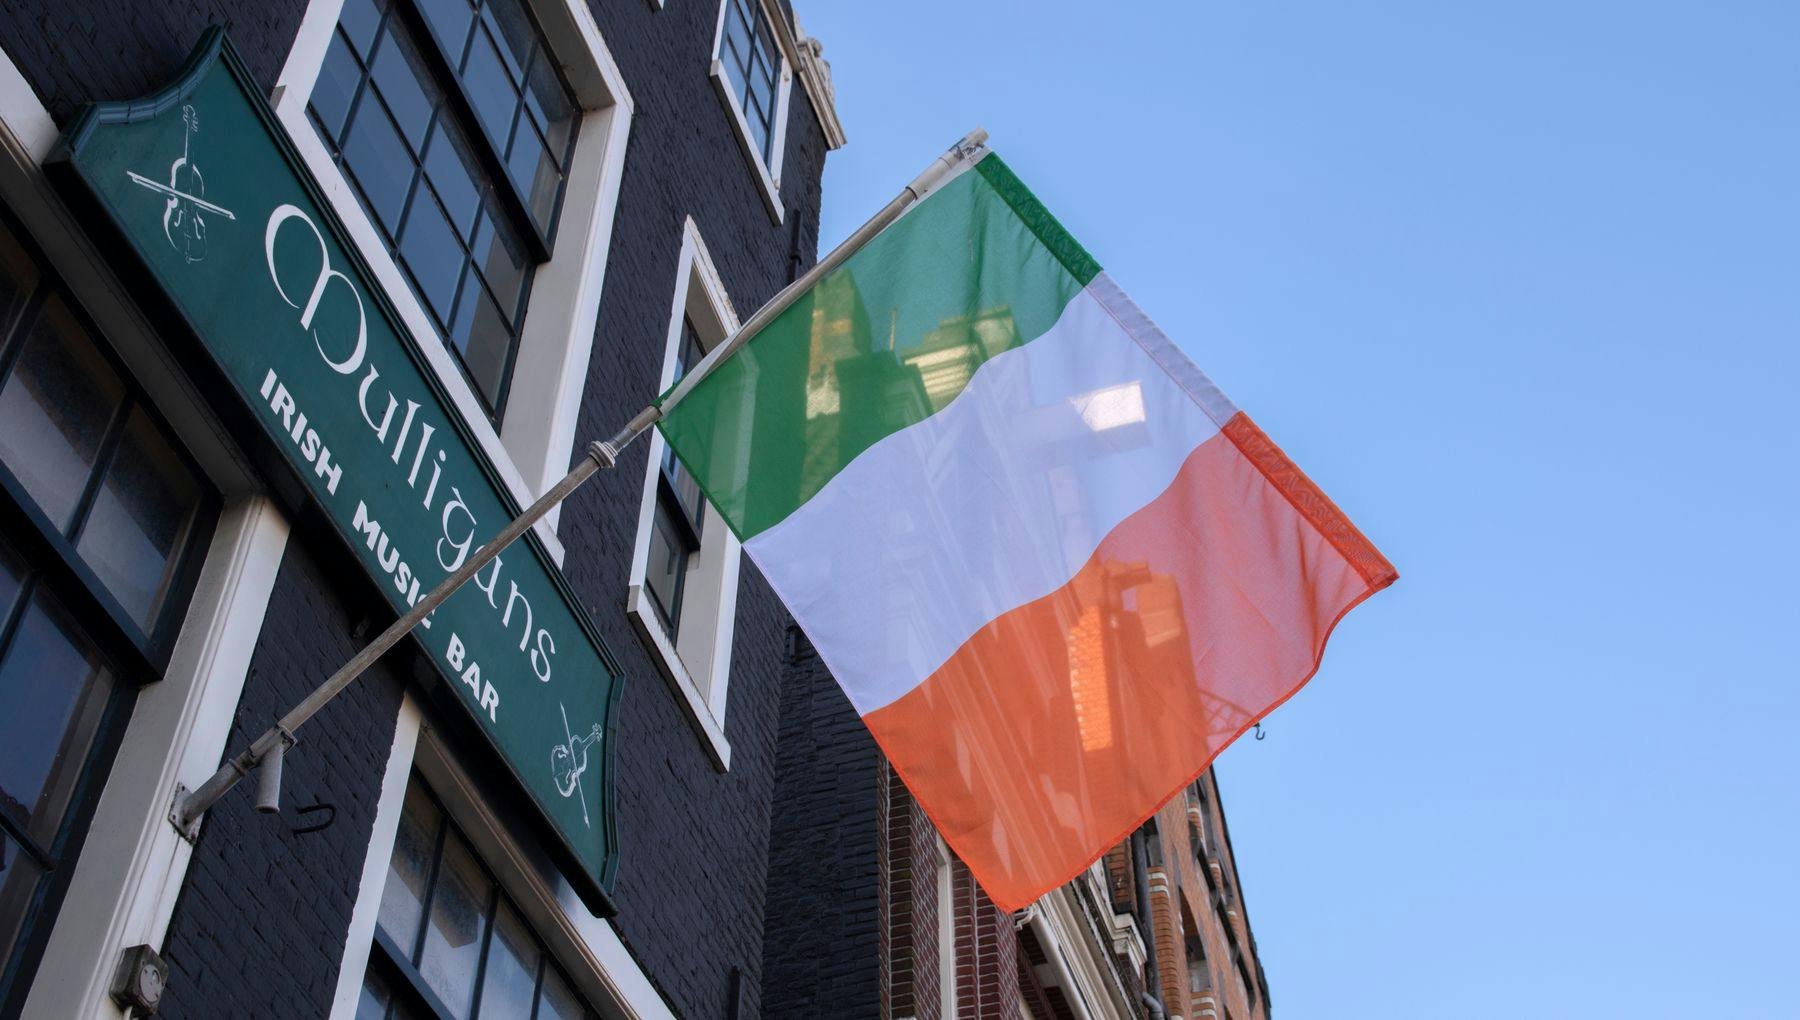 Irish Flag At The Mulligans Pub At Amsterdam The Netherlands 2020